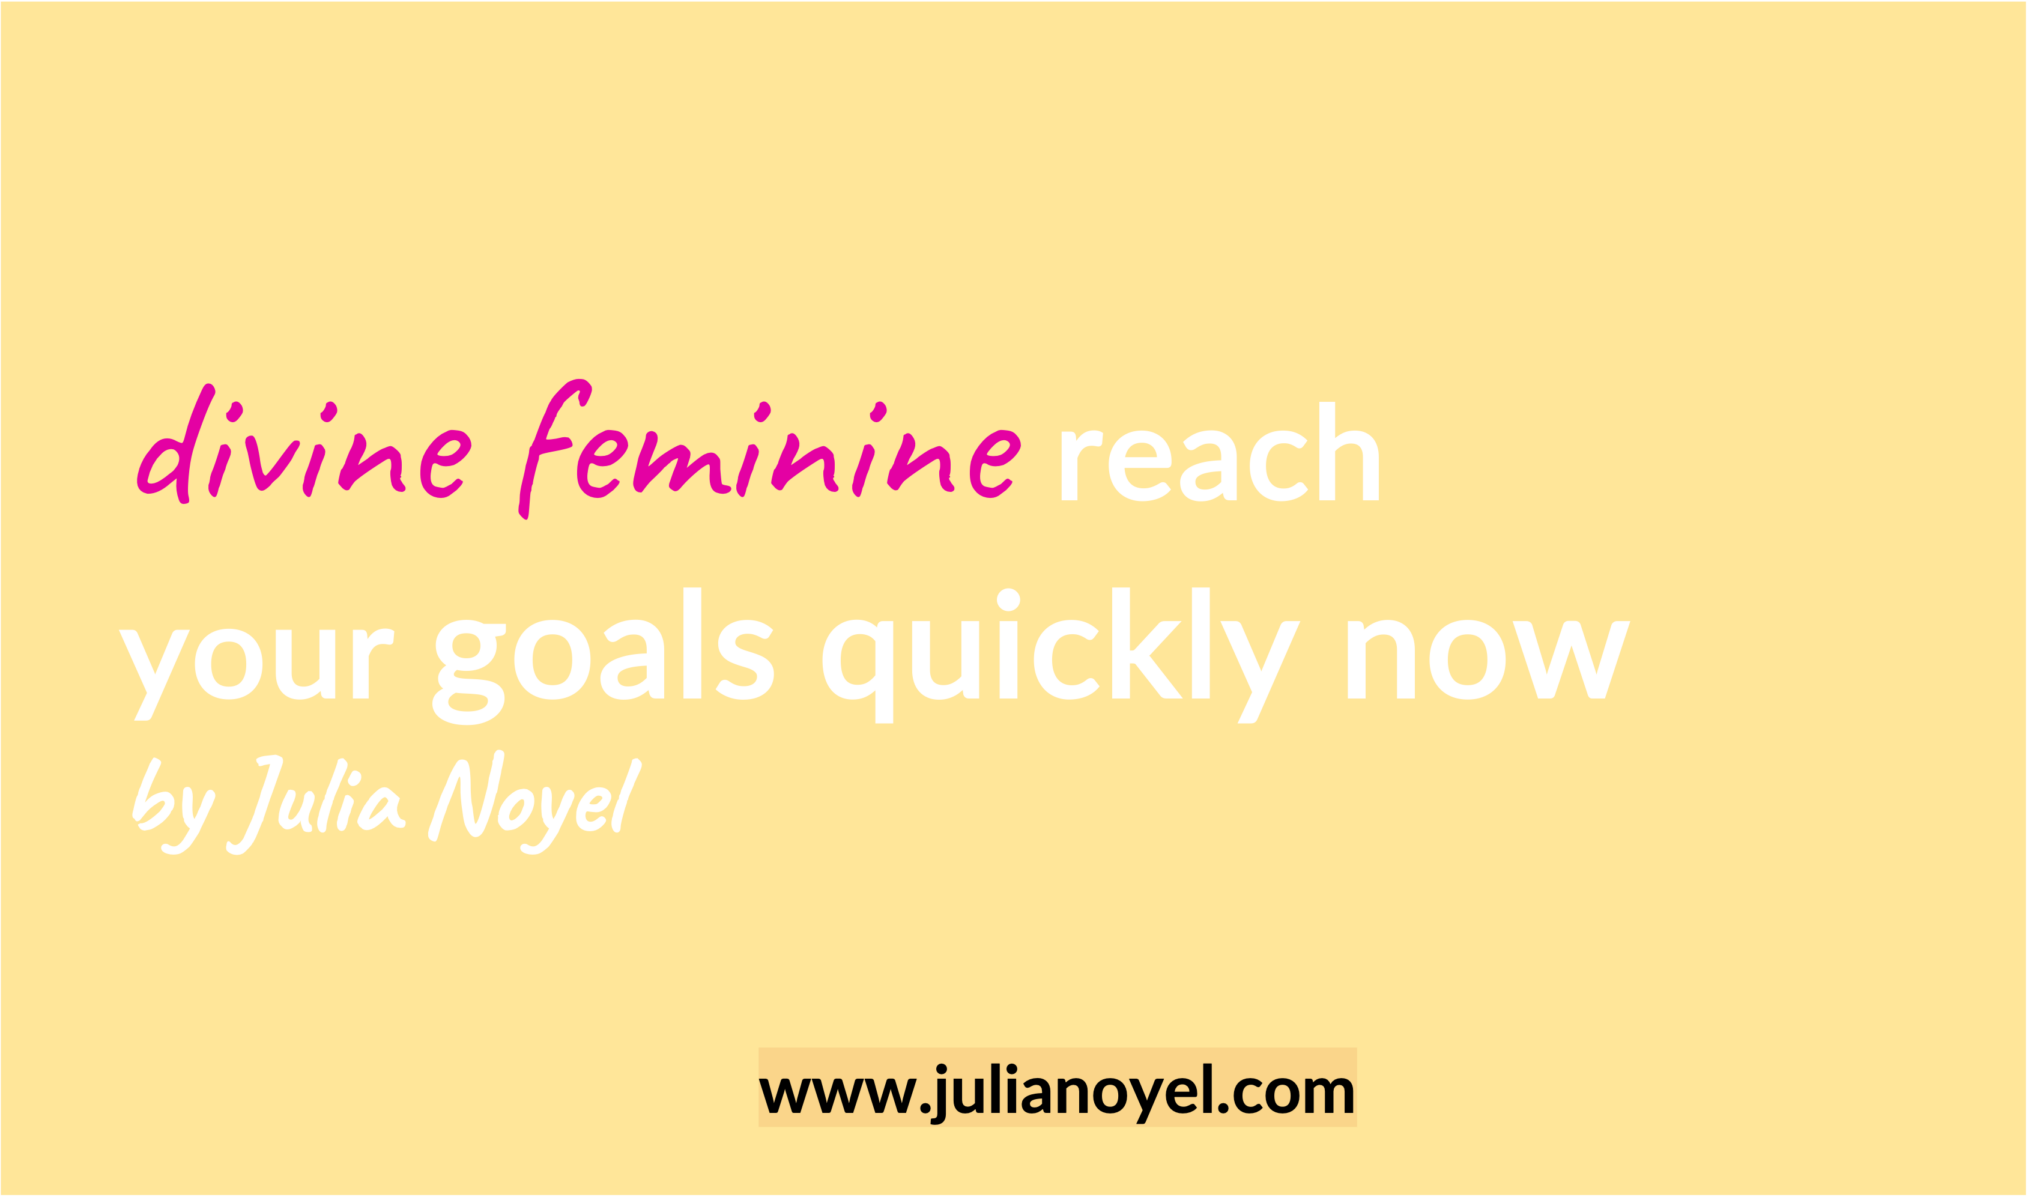 divine feminine reach your goals quickly now by Julia Noyel